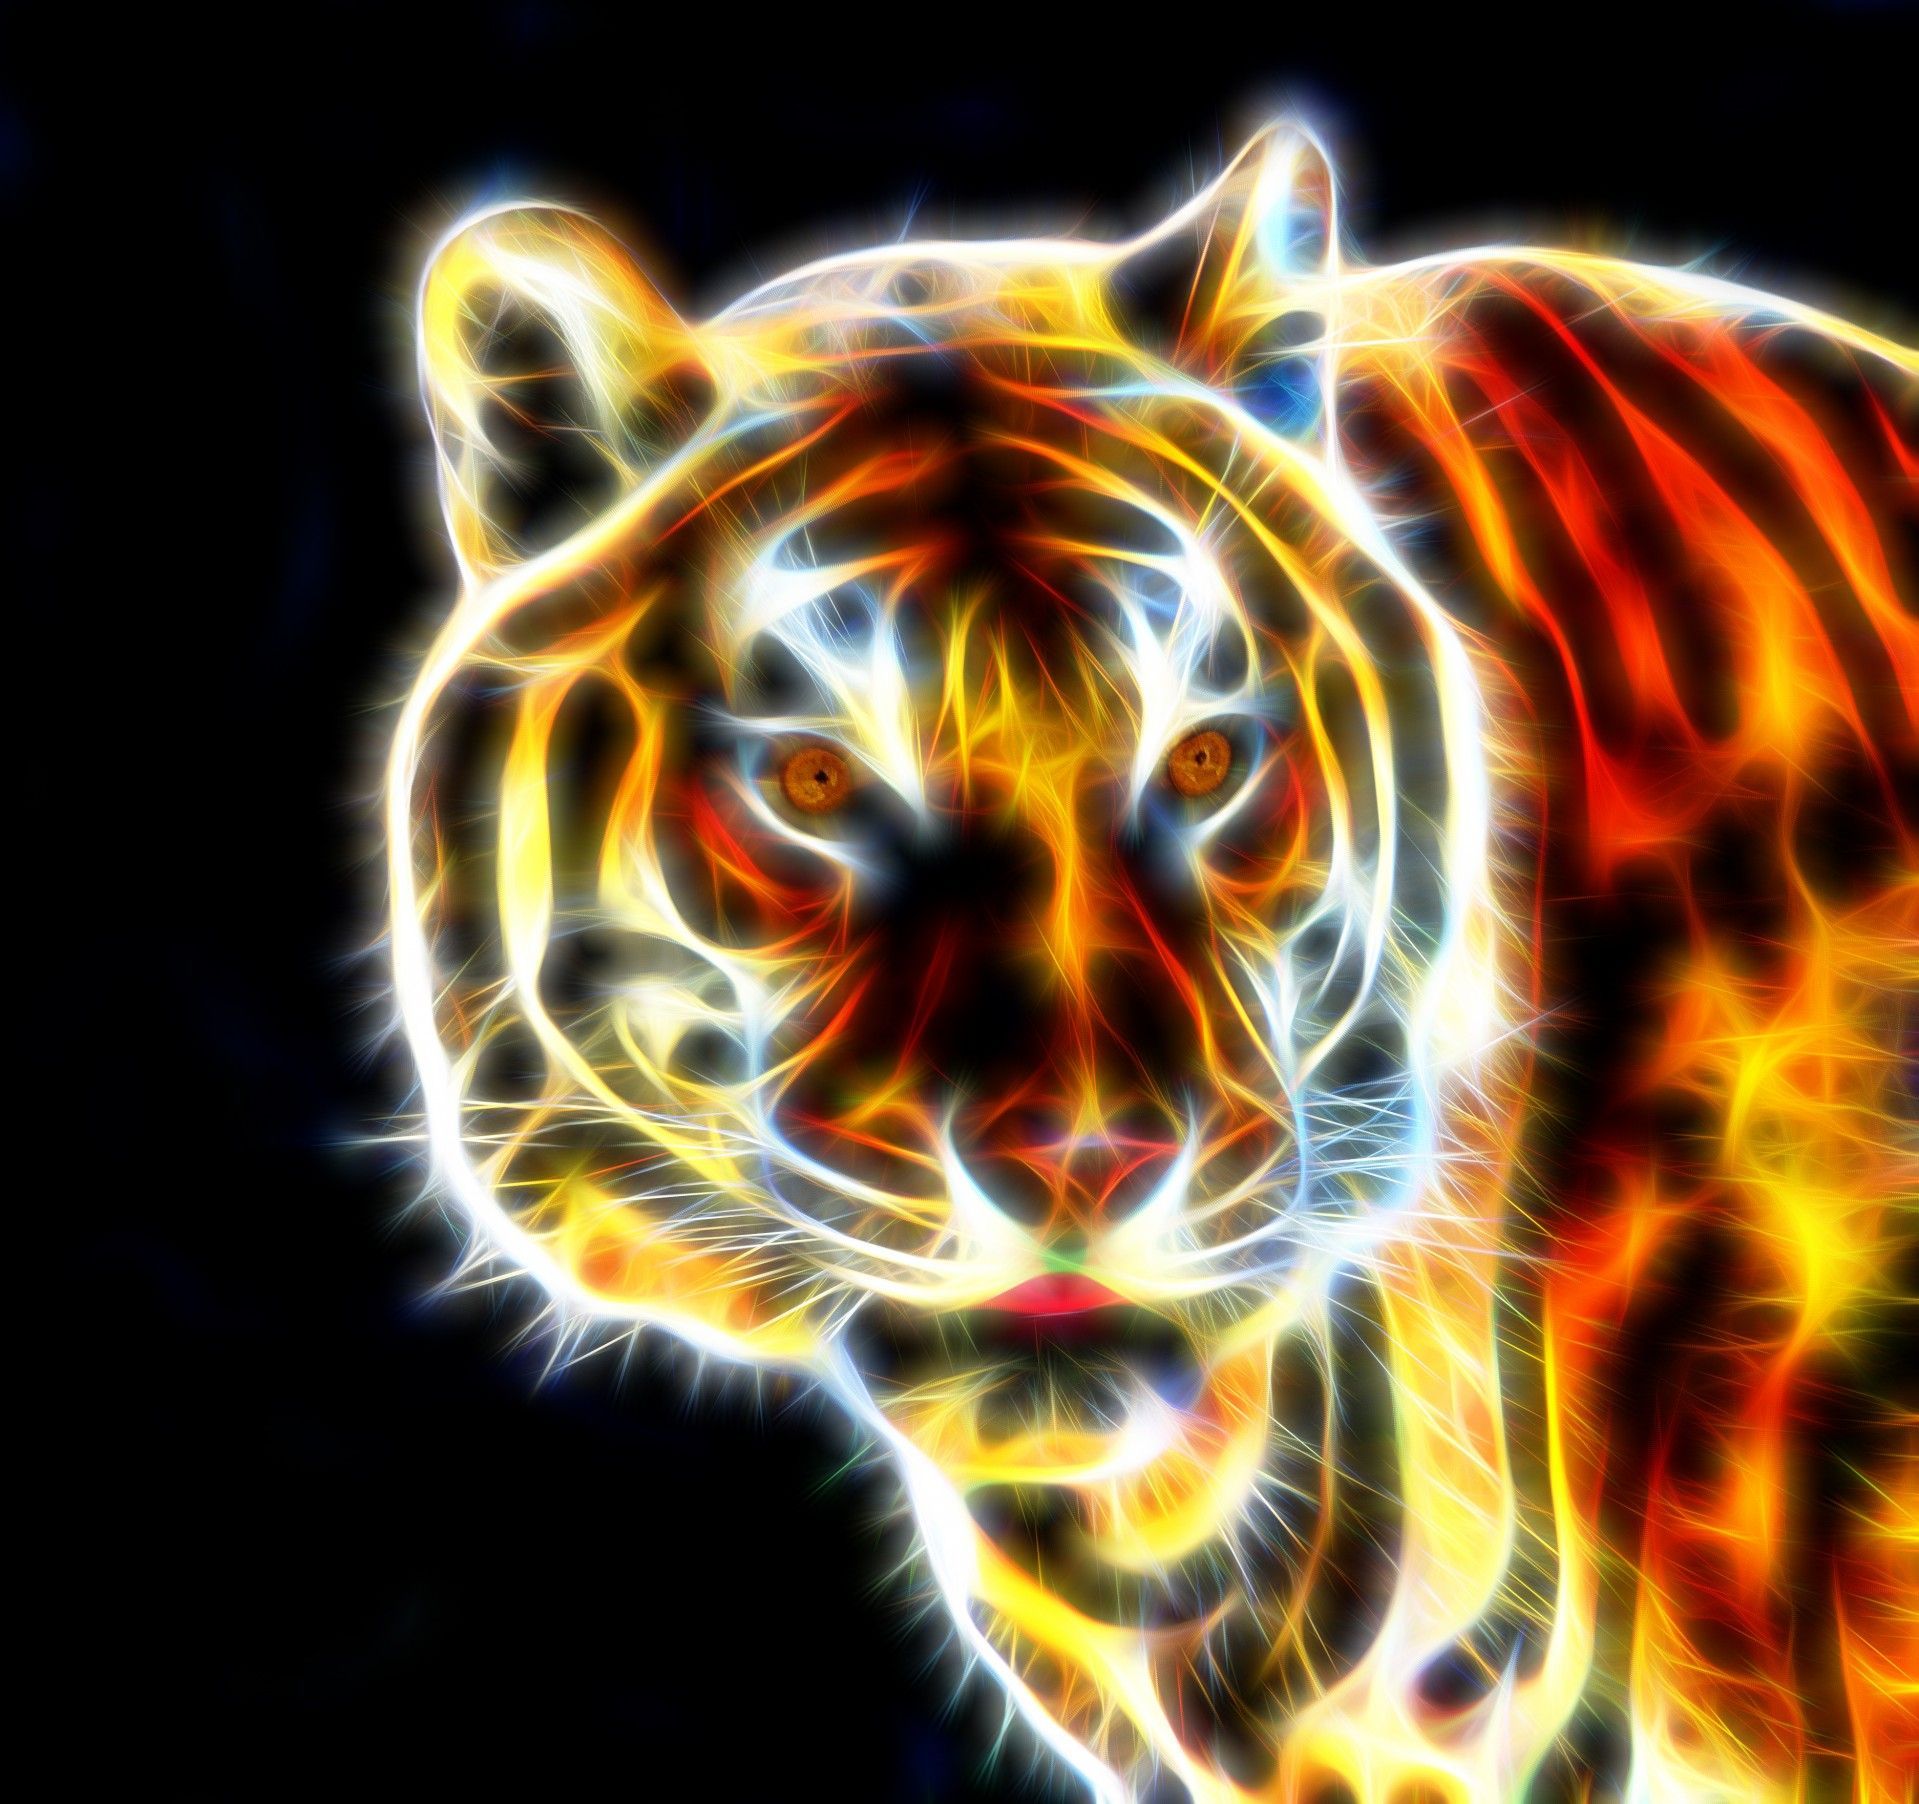 Tiger Image Domain Picture. Tiger image, Fractals, Tiger picture